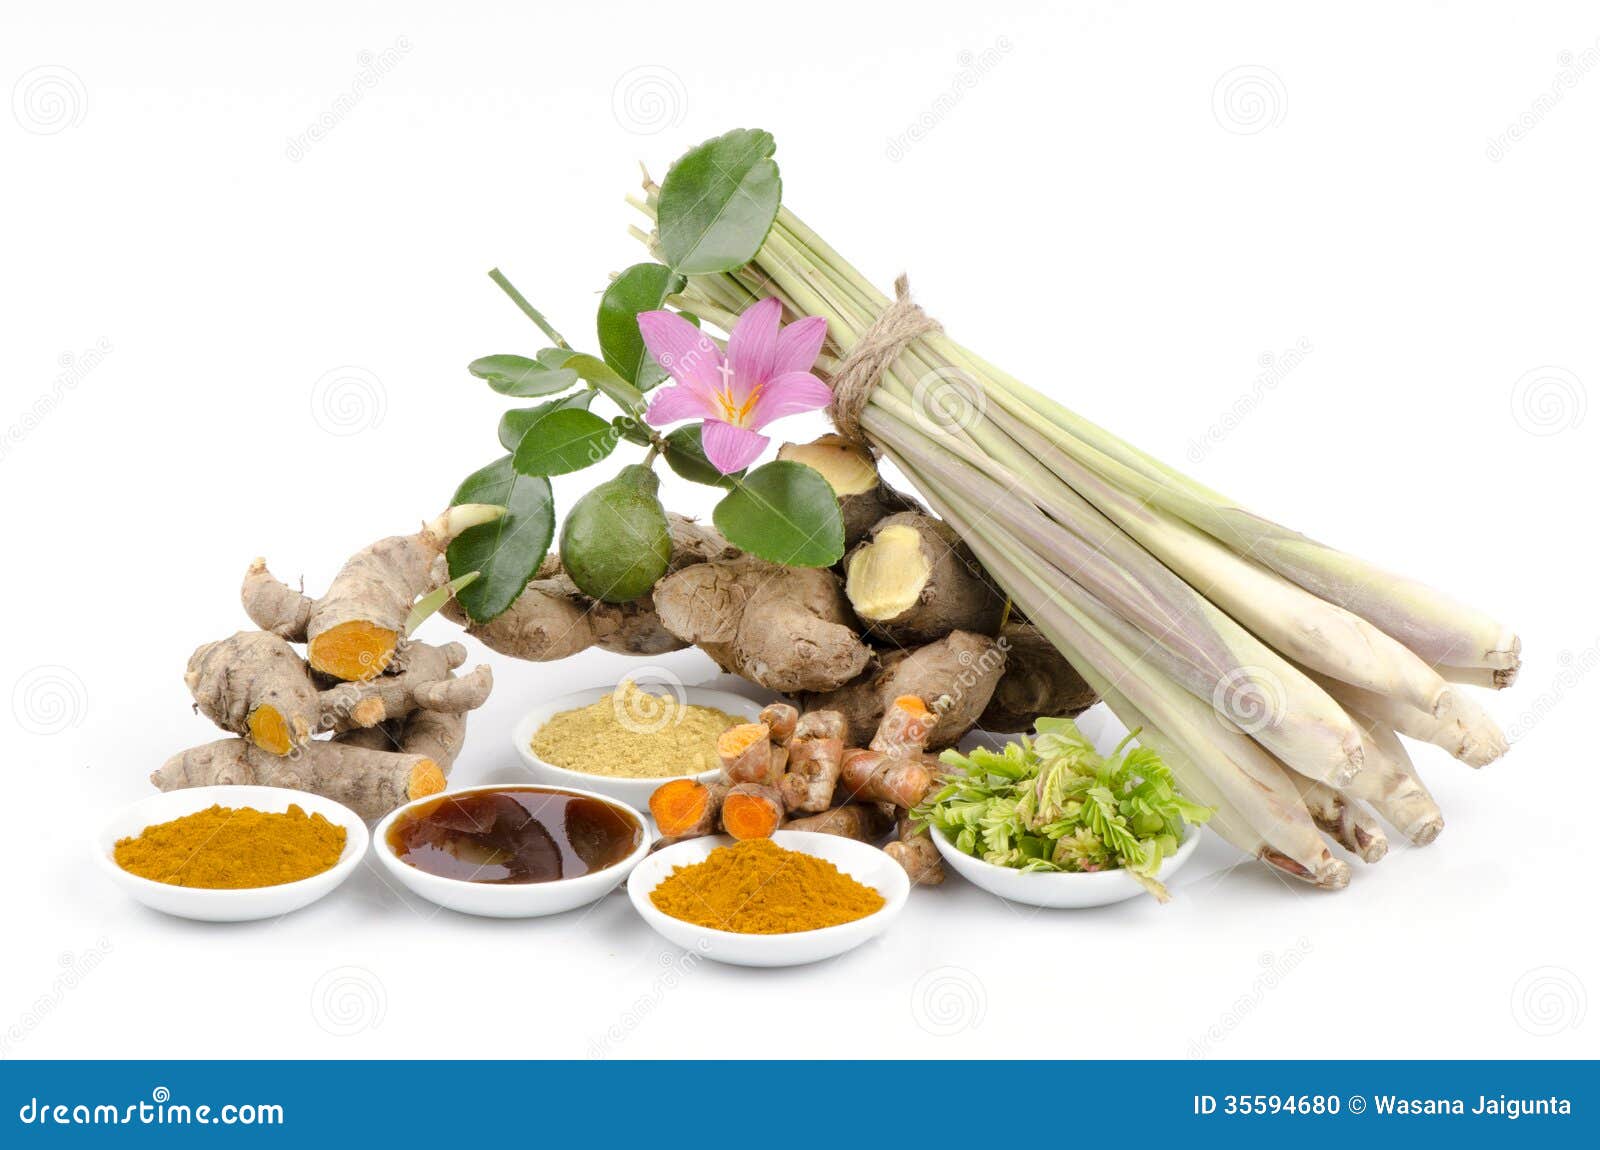 Stock Photo Thailand Herbal Body Scrub For Skin Treatment And Skin